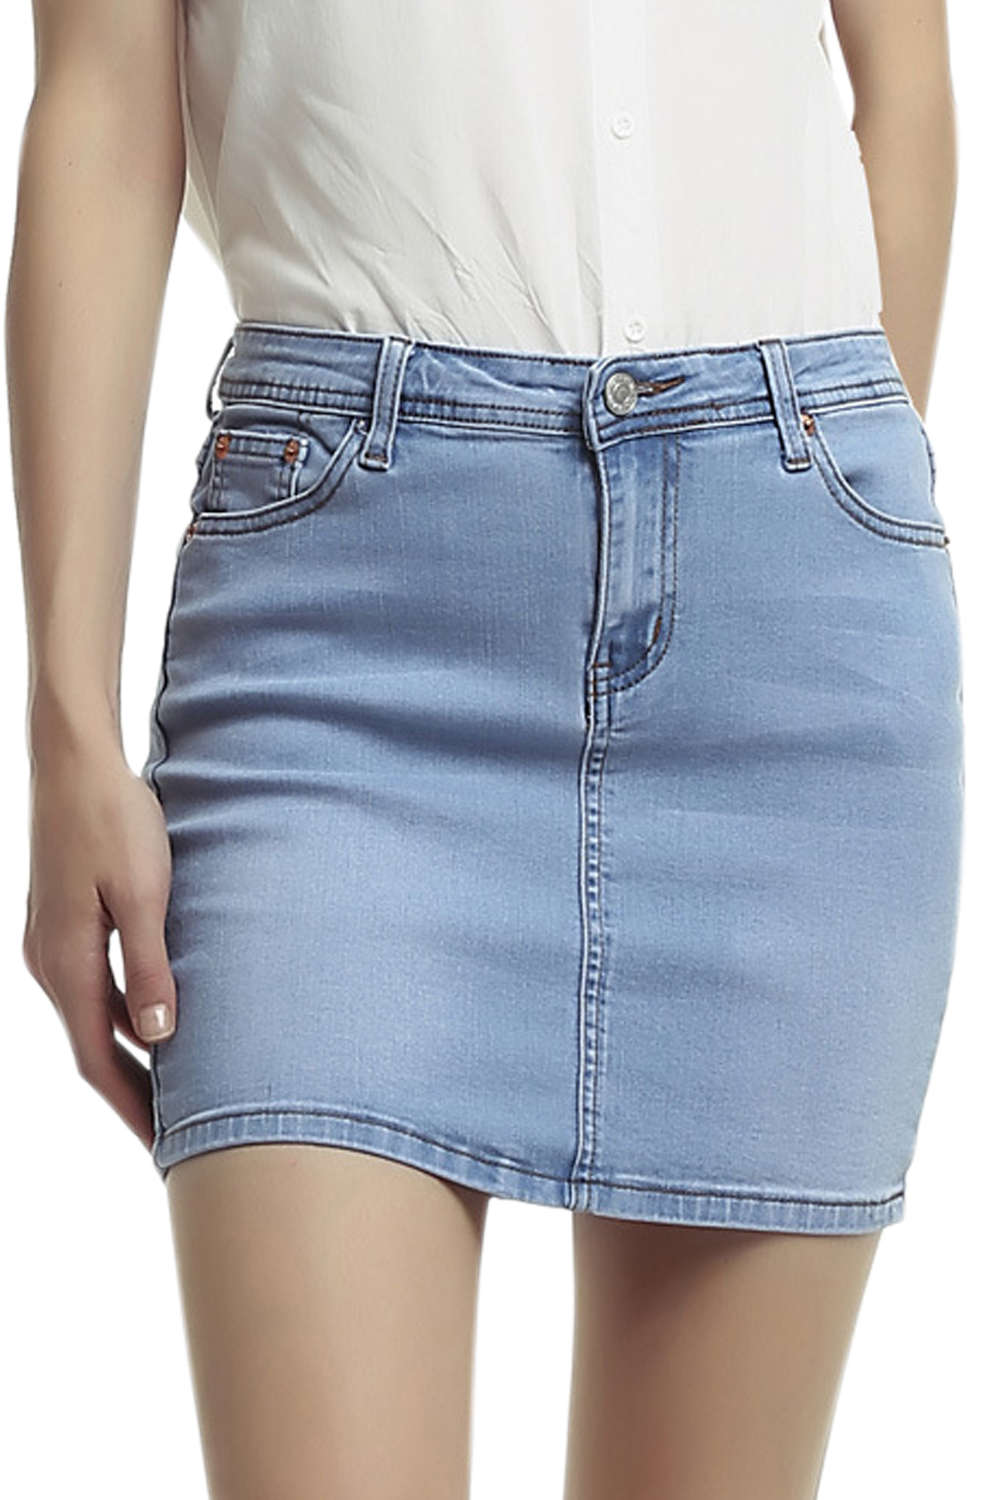 Iyasson Women's Demin Skirt Jean Skirts